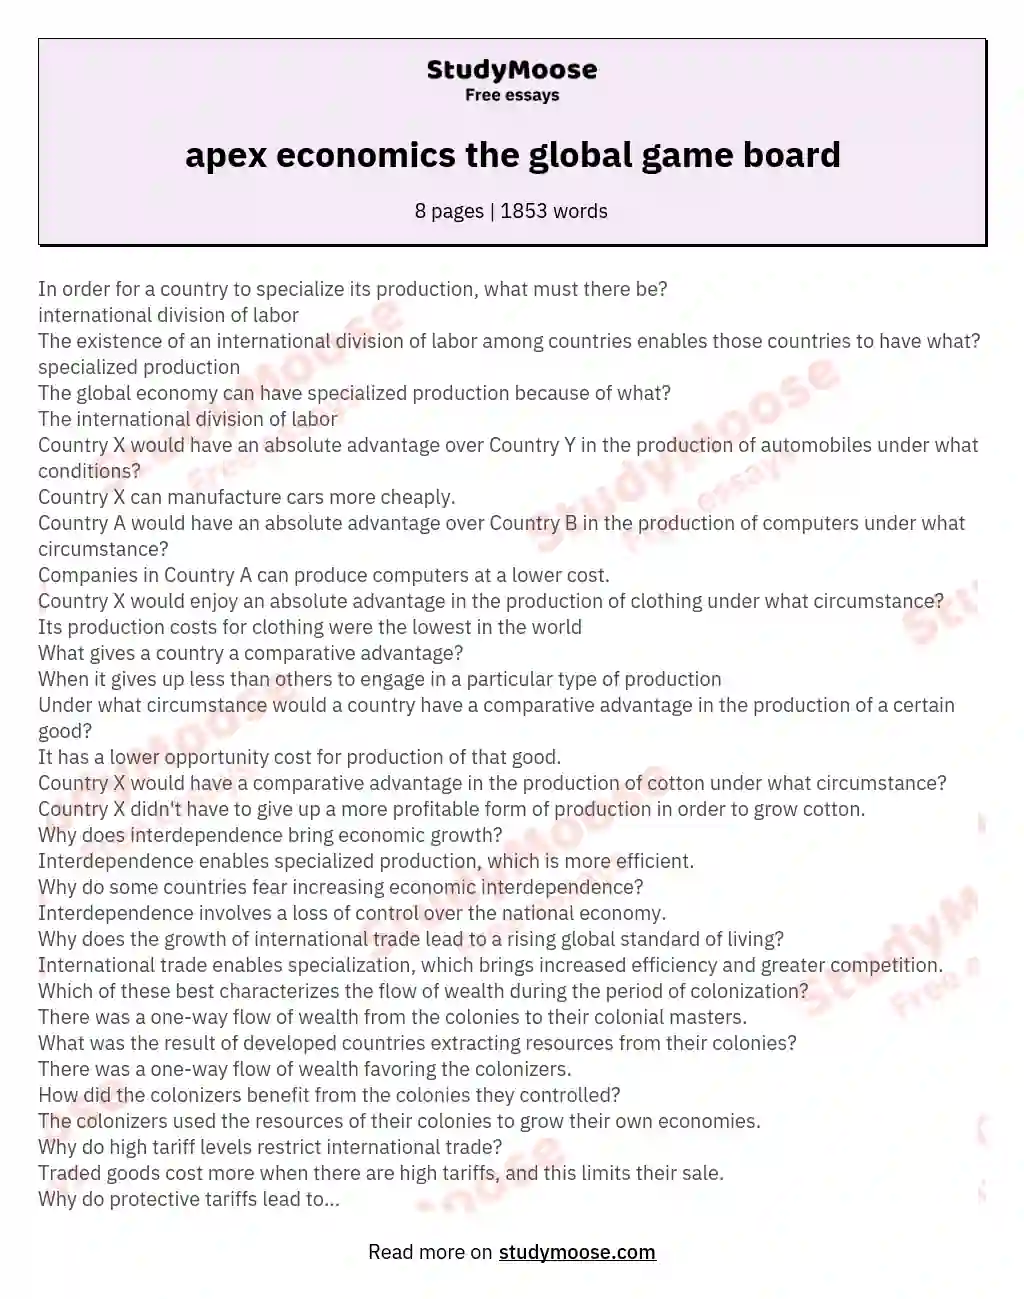 apex economics the global game board essay